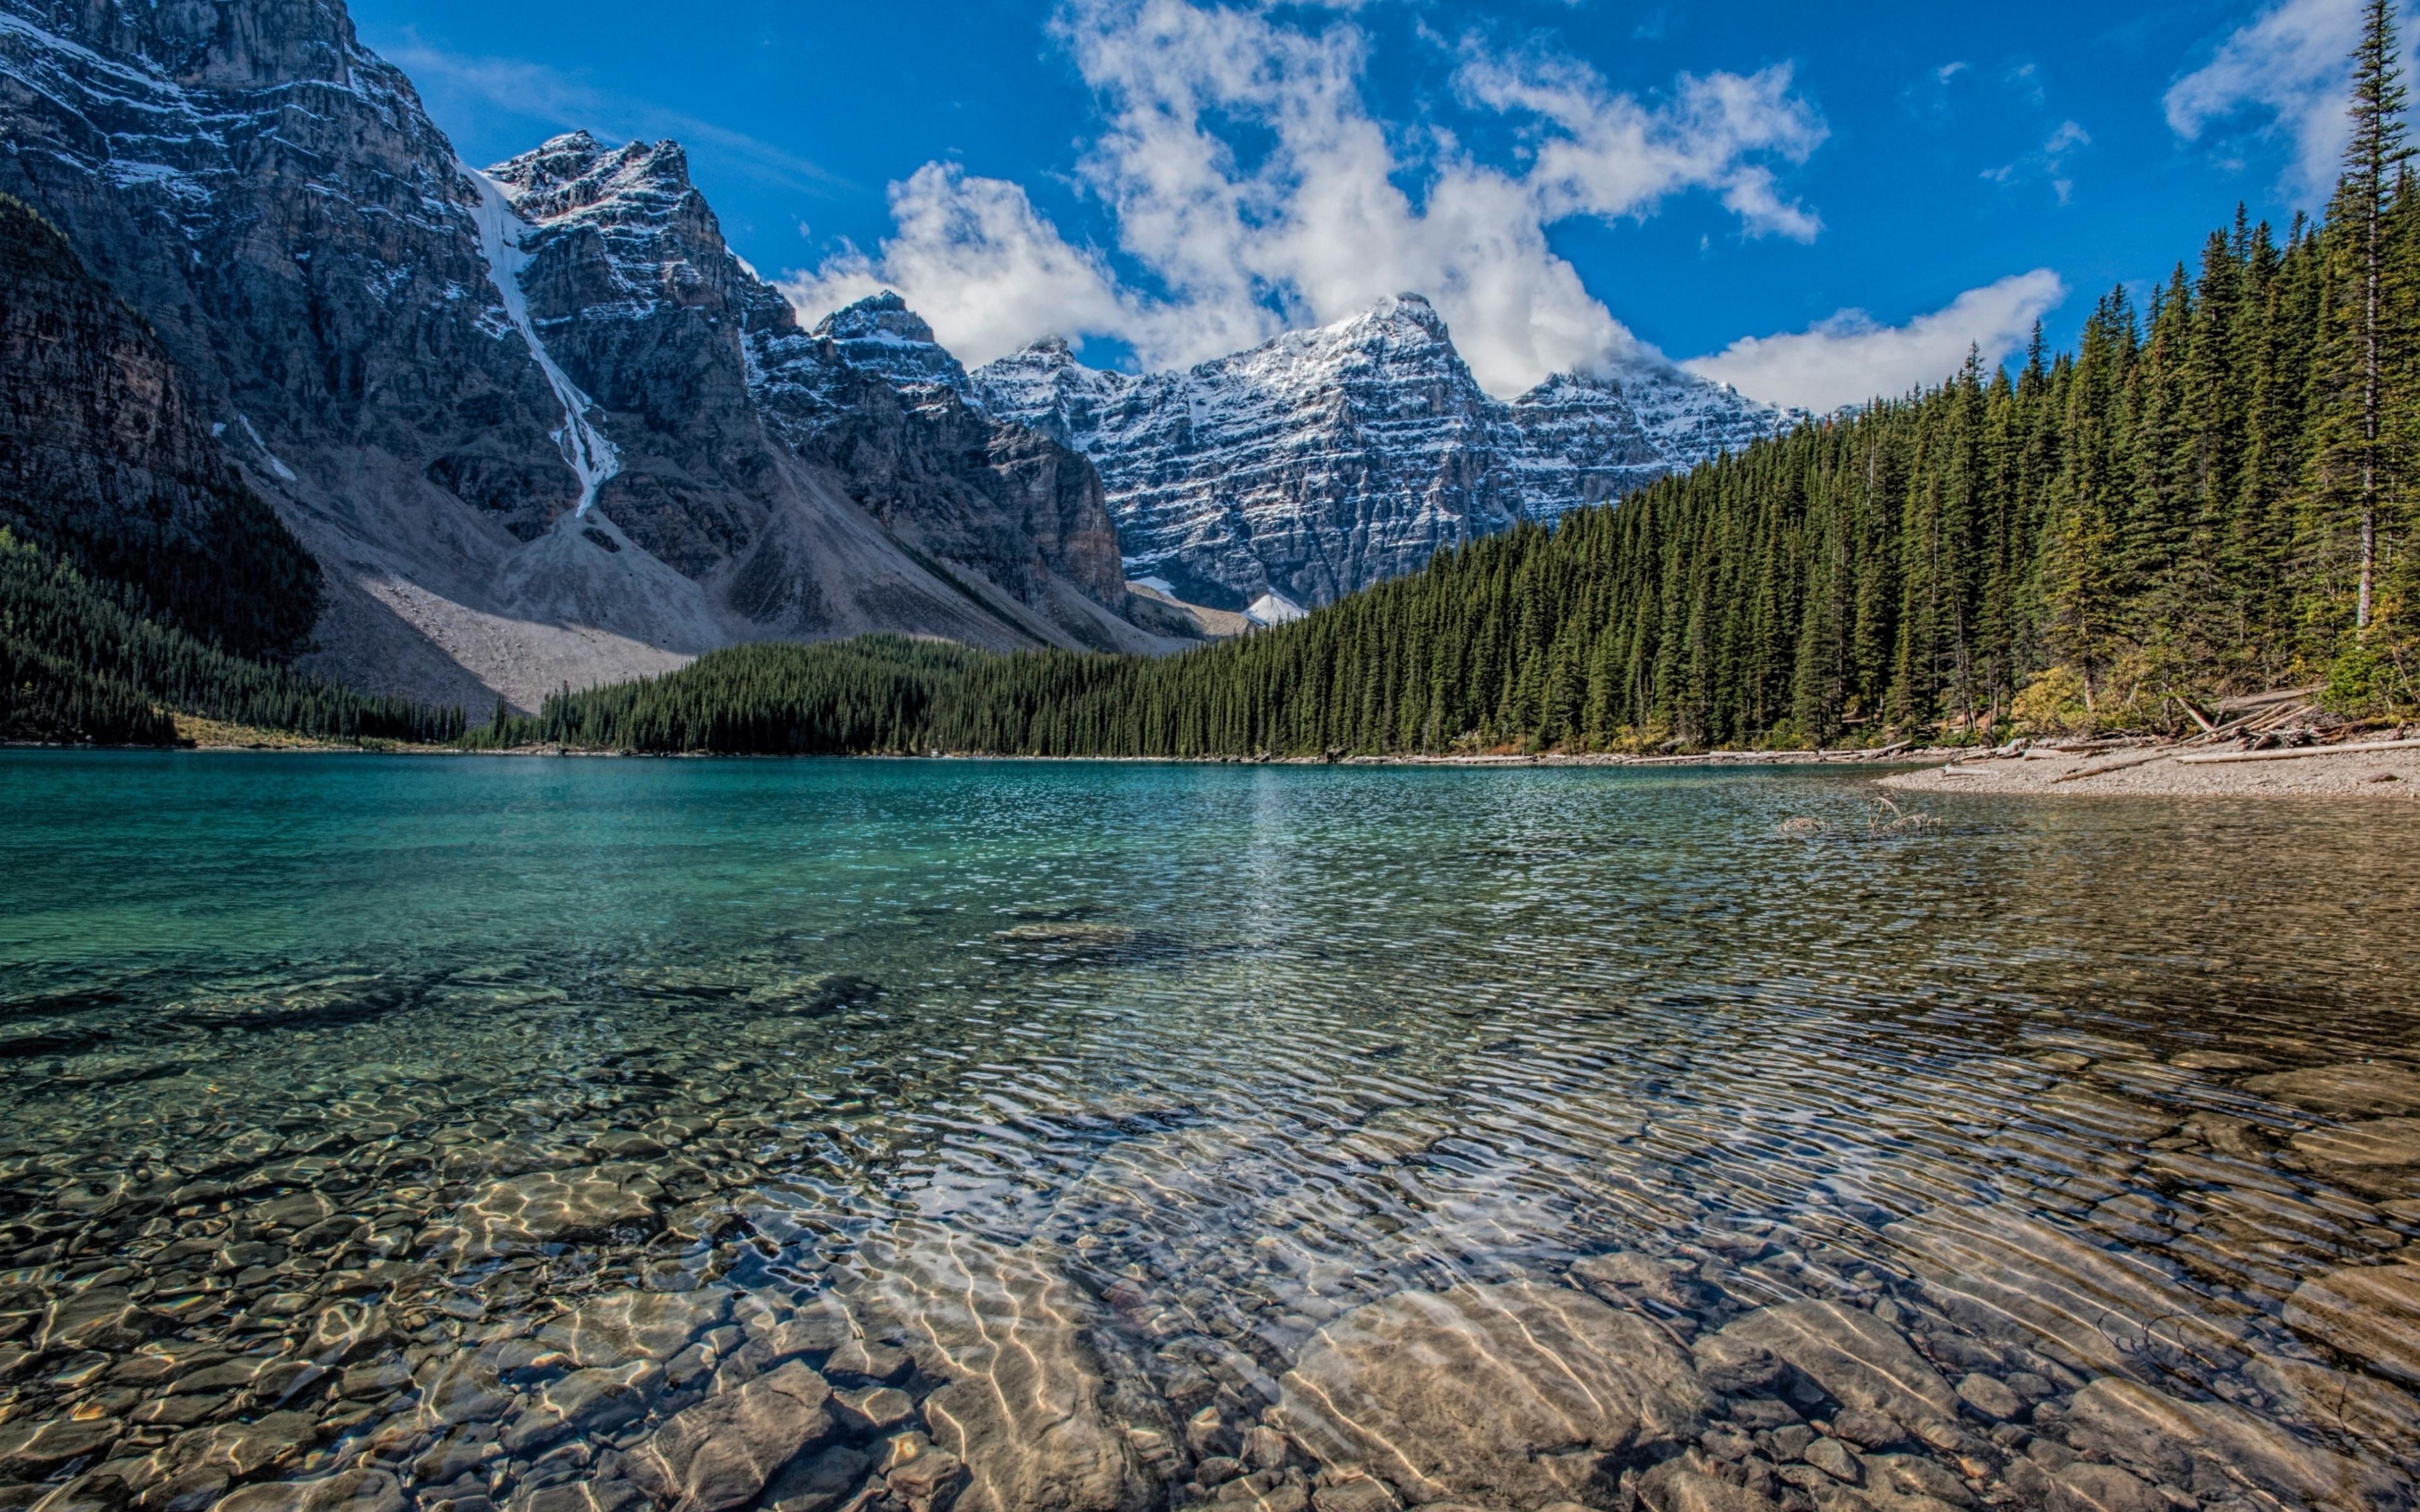 Download 3840x2400 wallpaper clean lake, mountains range, trees